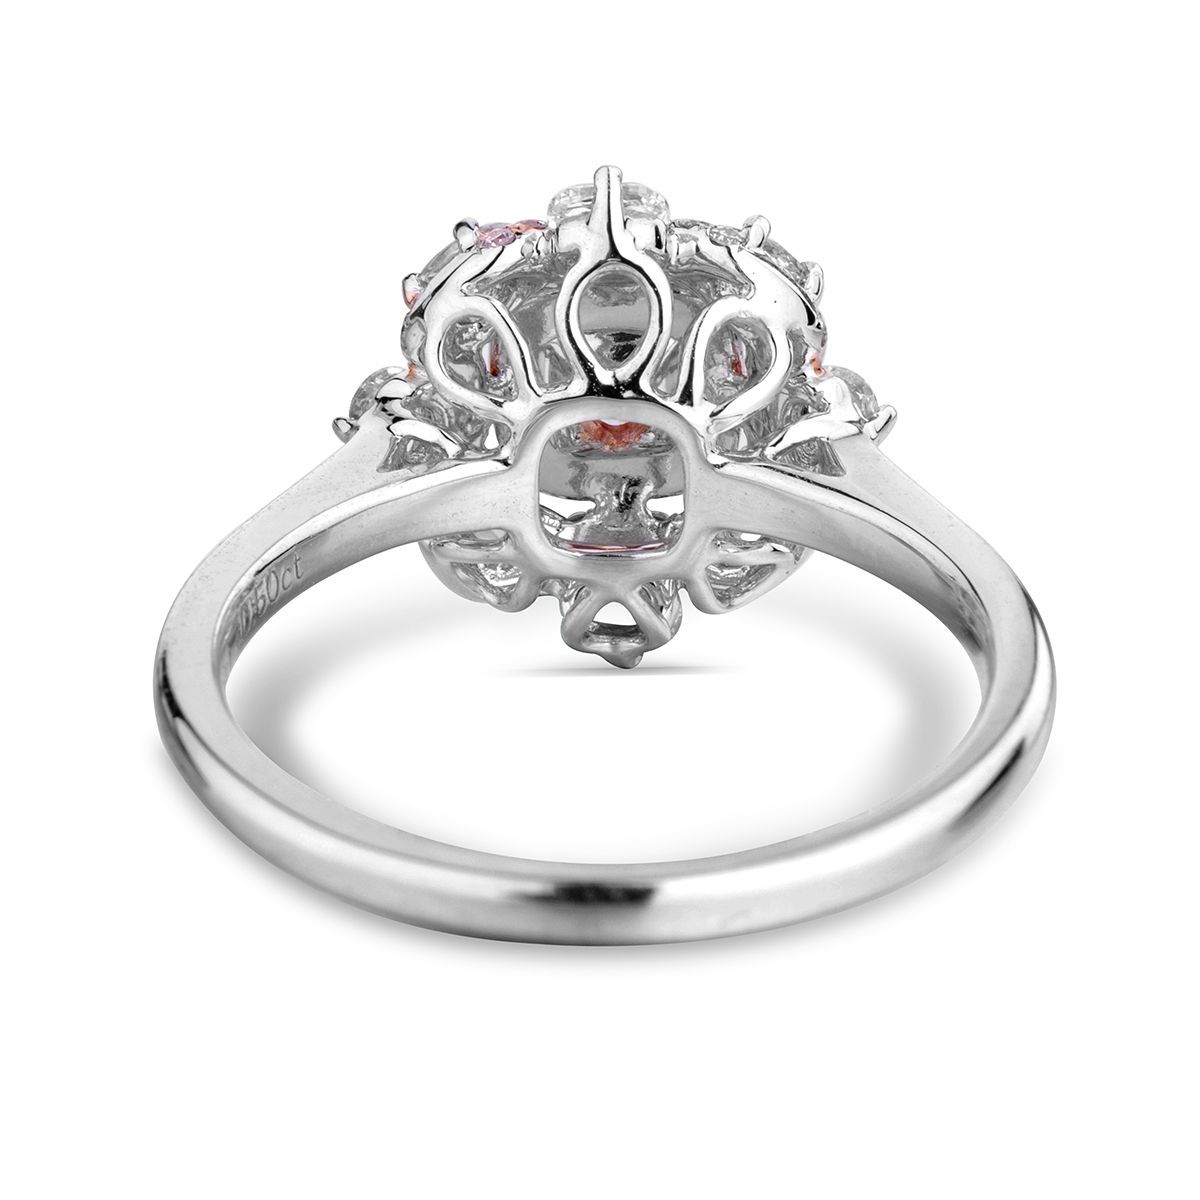 Fancy Purple Pink Diamond Ring, 0.20 Ct. (0.70 Ct. TW), Cushion shape, GIA Certified, 2185237204